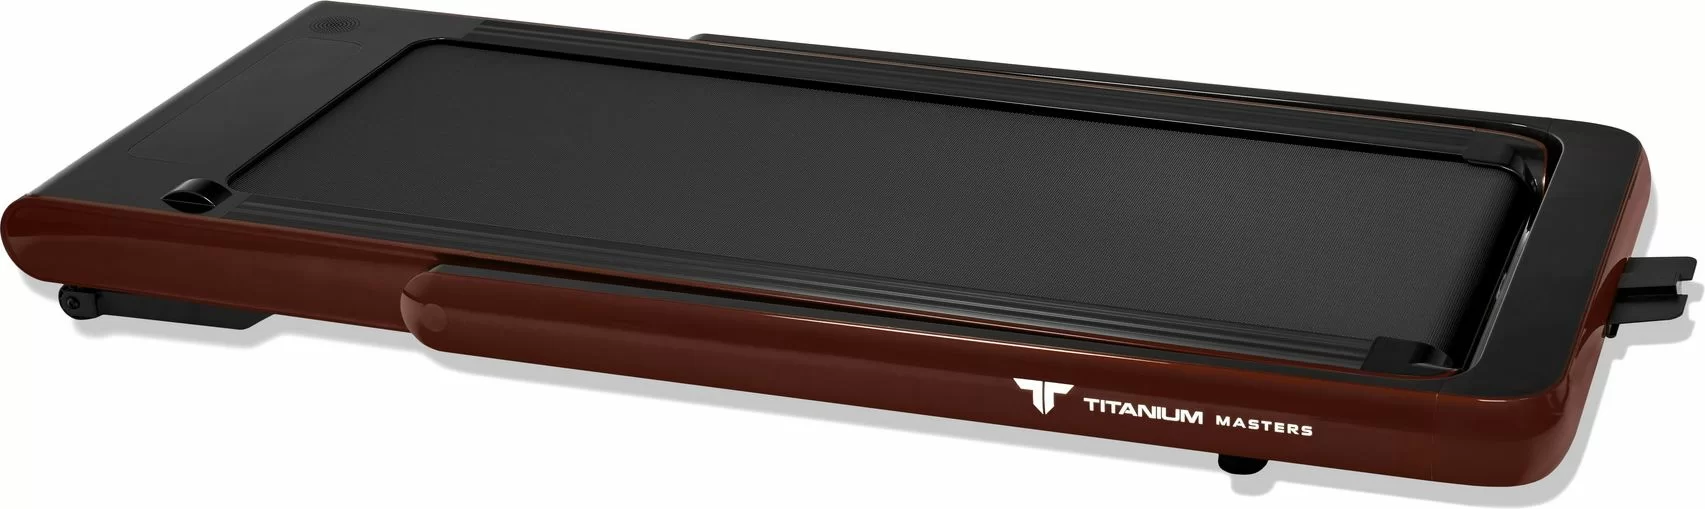 Фото Беговая дорожка Titanium Masters Slimtech S60, коричневая со склада магазина СпортСЕ